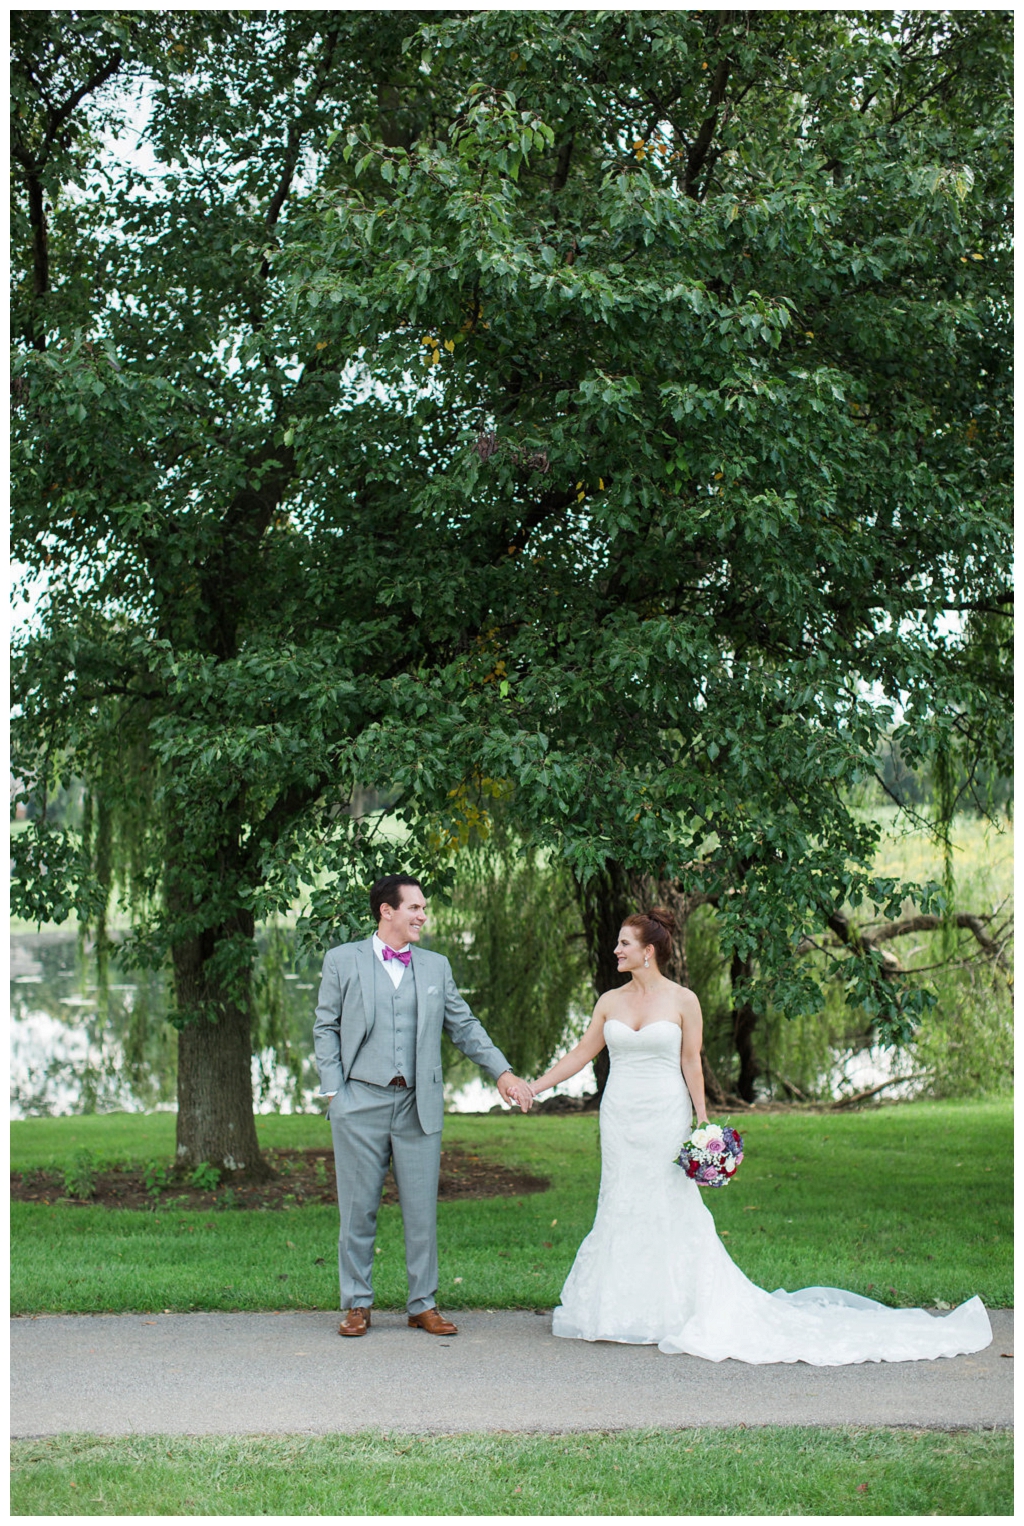 Lexington Wedding Photographers - Ann & David's Elegant Outdoor Wedding